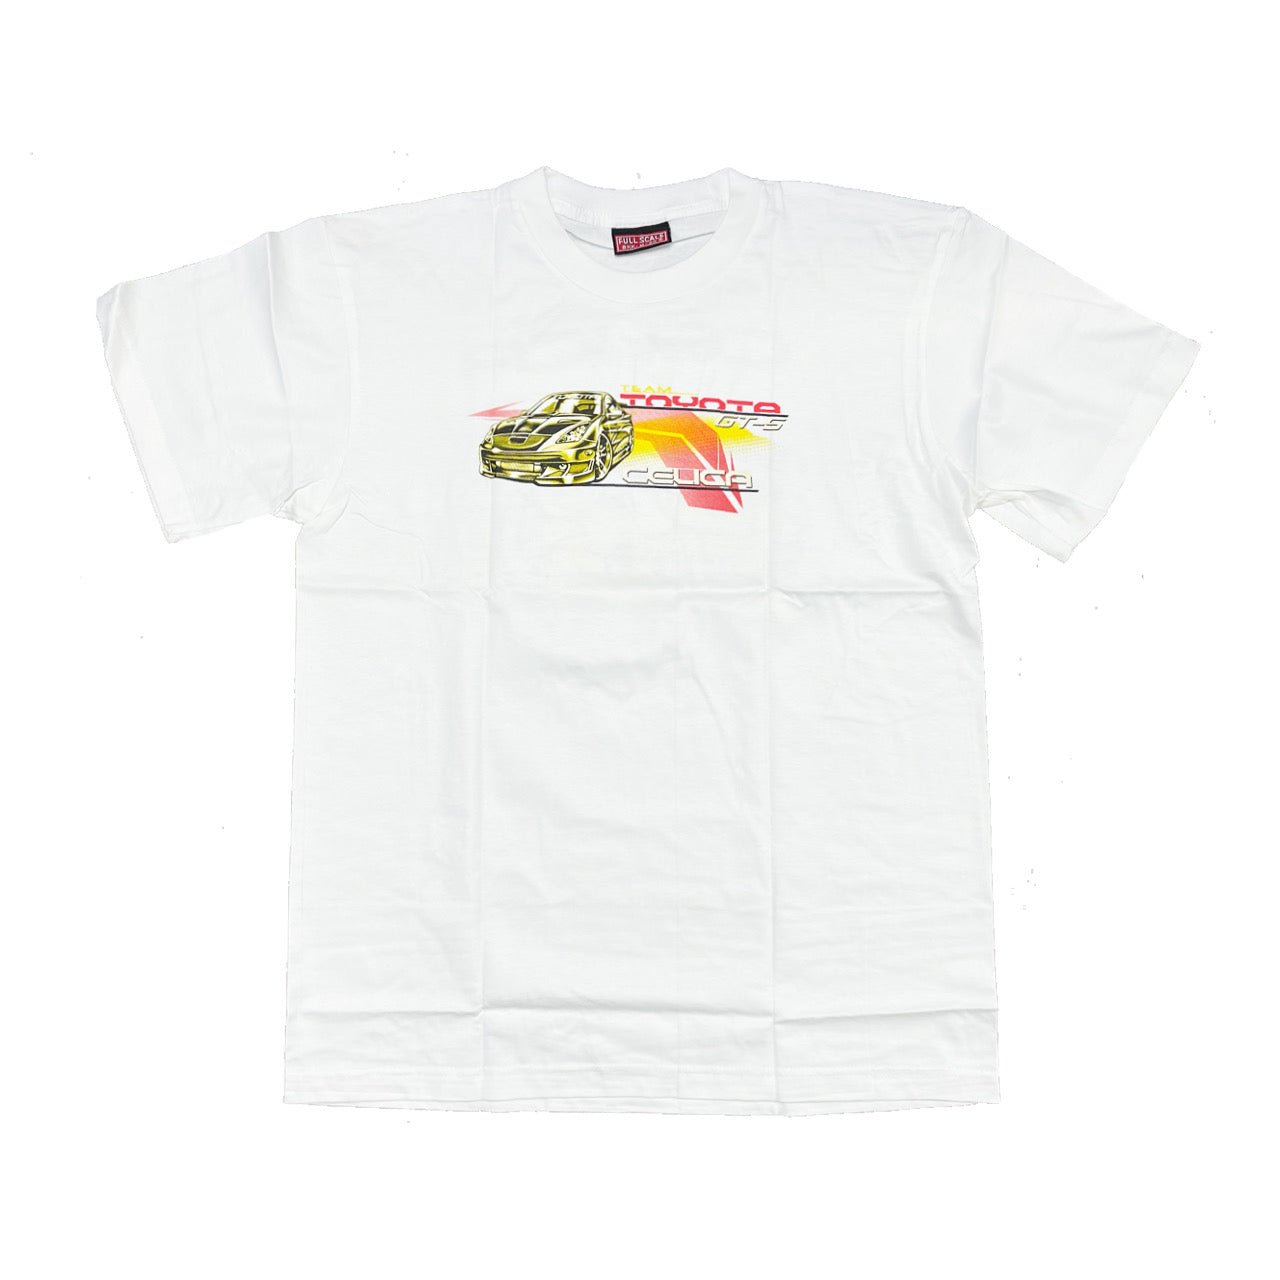 Team Toyota GT-S Celia T-shirt White